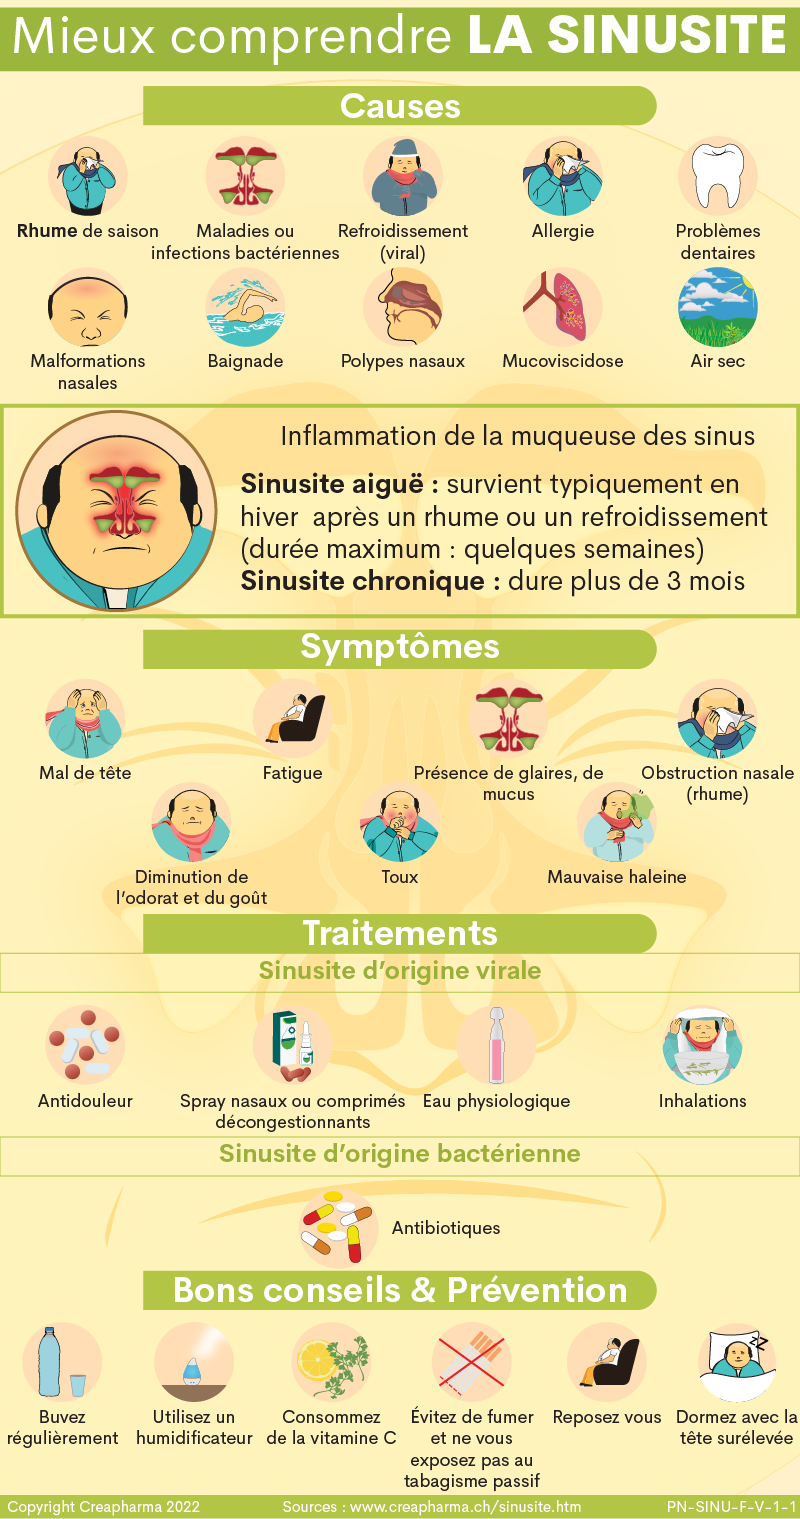 Sinusite : causes, symptômes & traitements | Creapharma